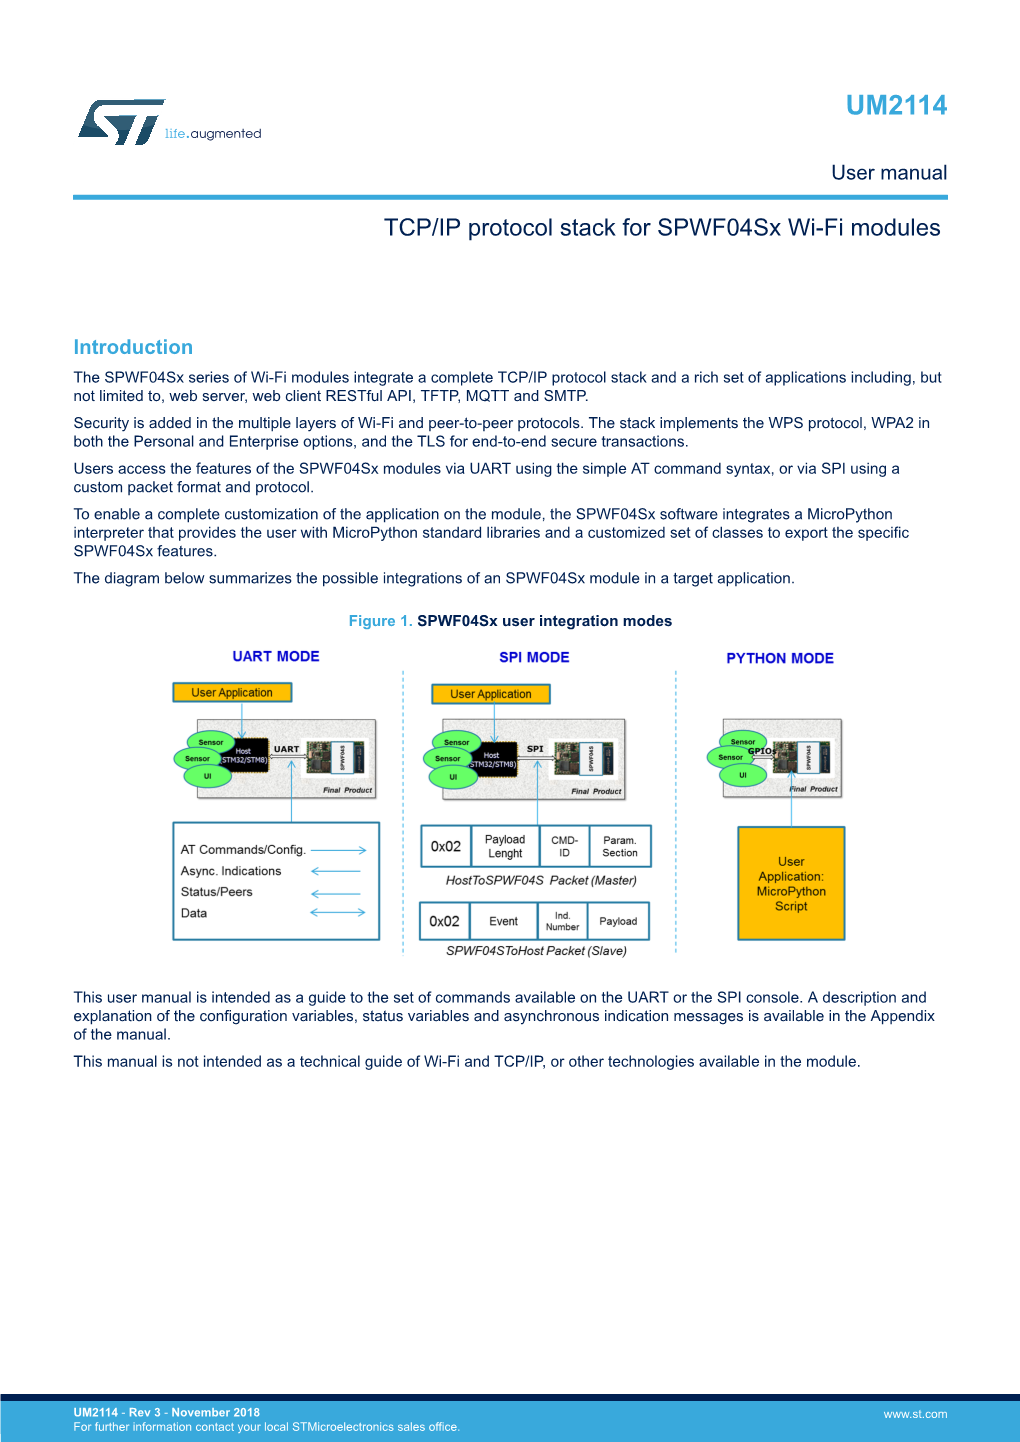 TCP/IP Protocol Stack for Spwf04sx Wi-Fi Modules